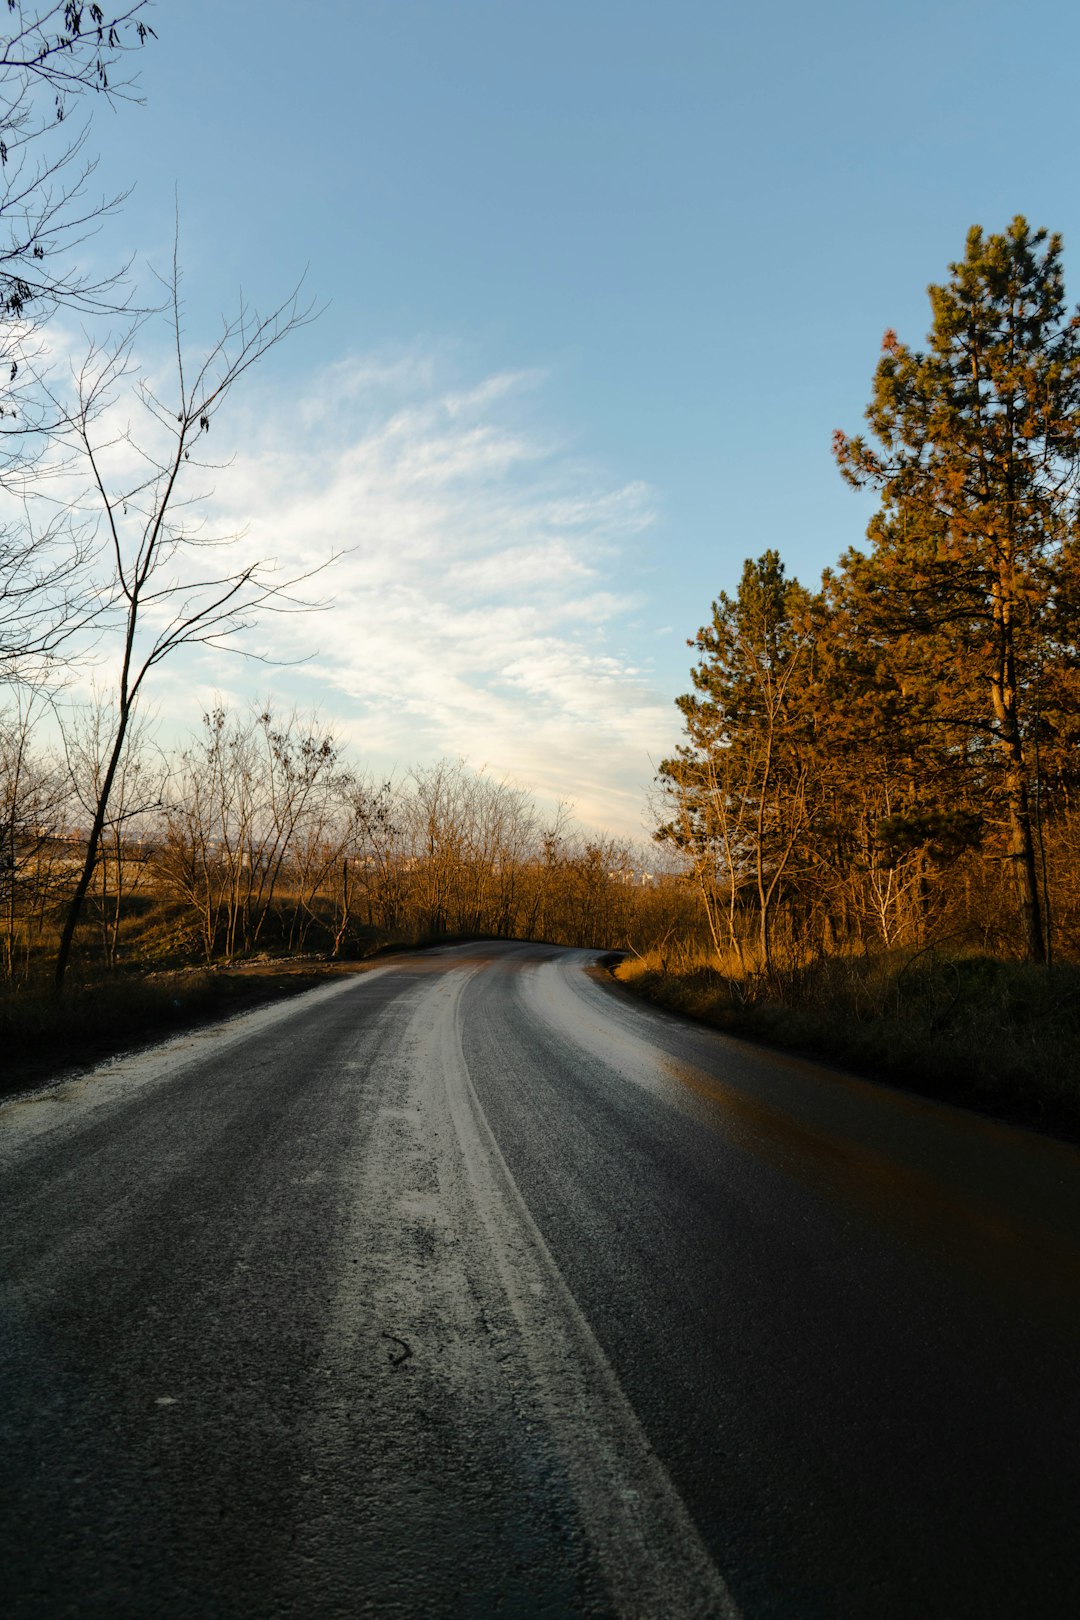 gray asphalt road between brown trees under blue sky during daytime